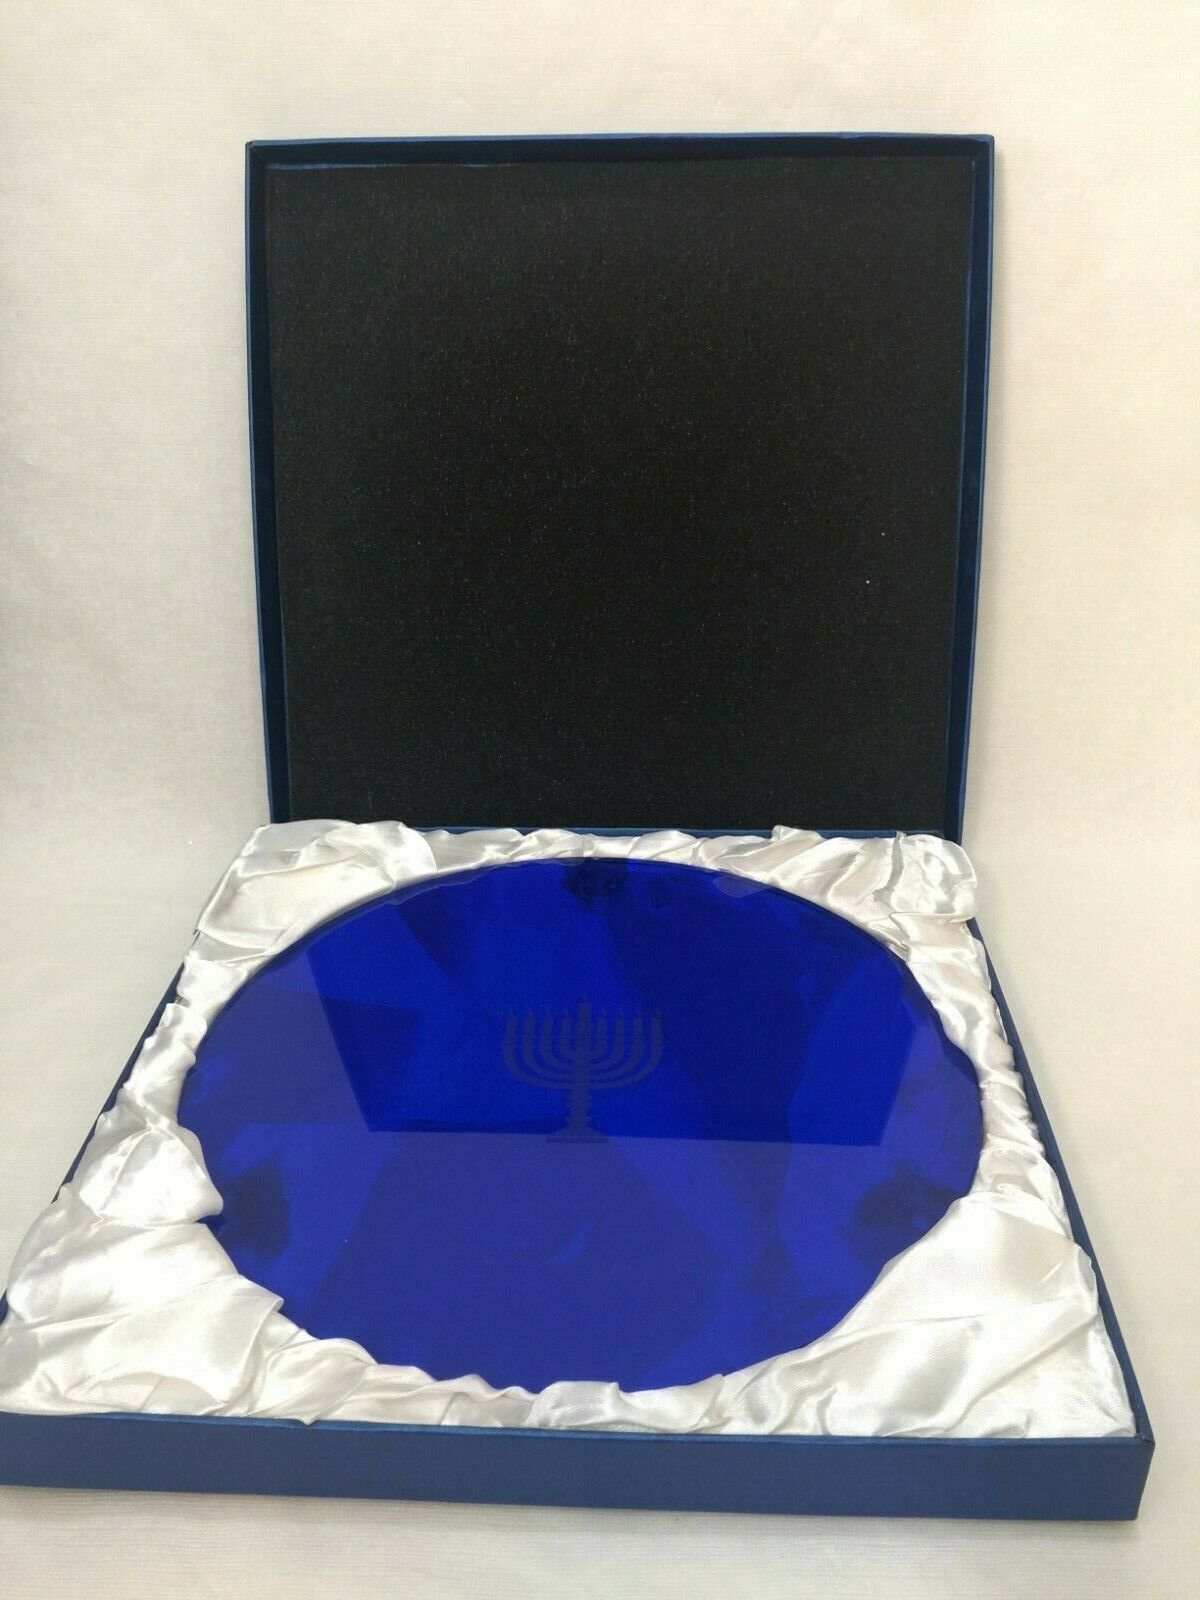 New Cobalt Crystal Blue Menorah Etched Cake Plate, 12 3/4